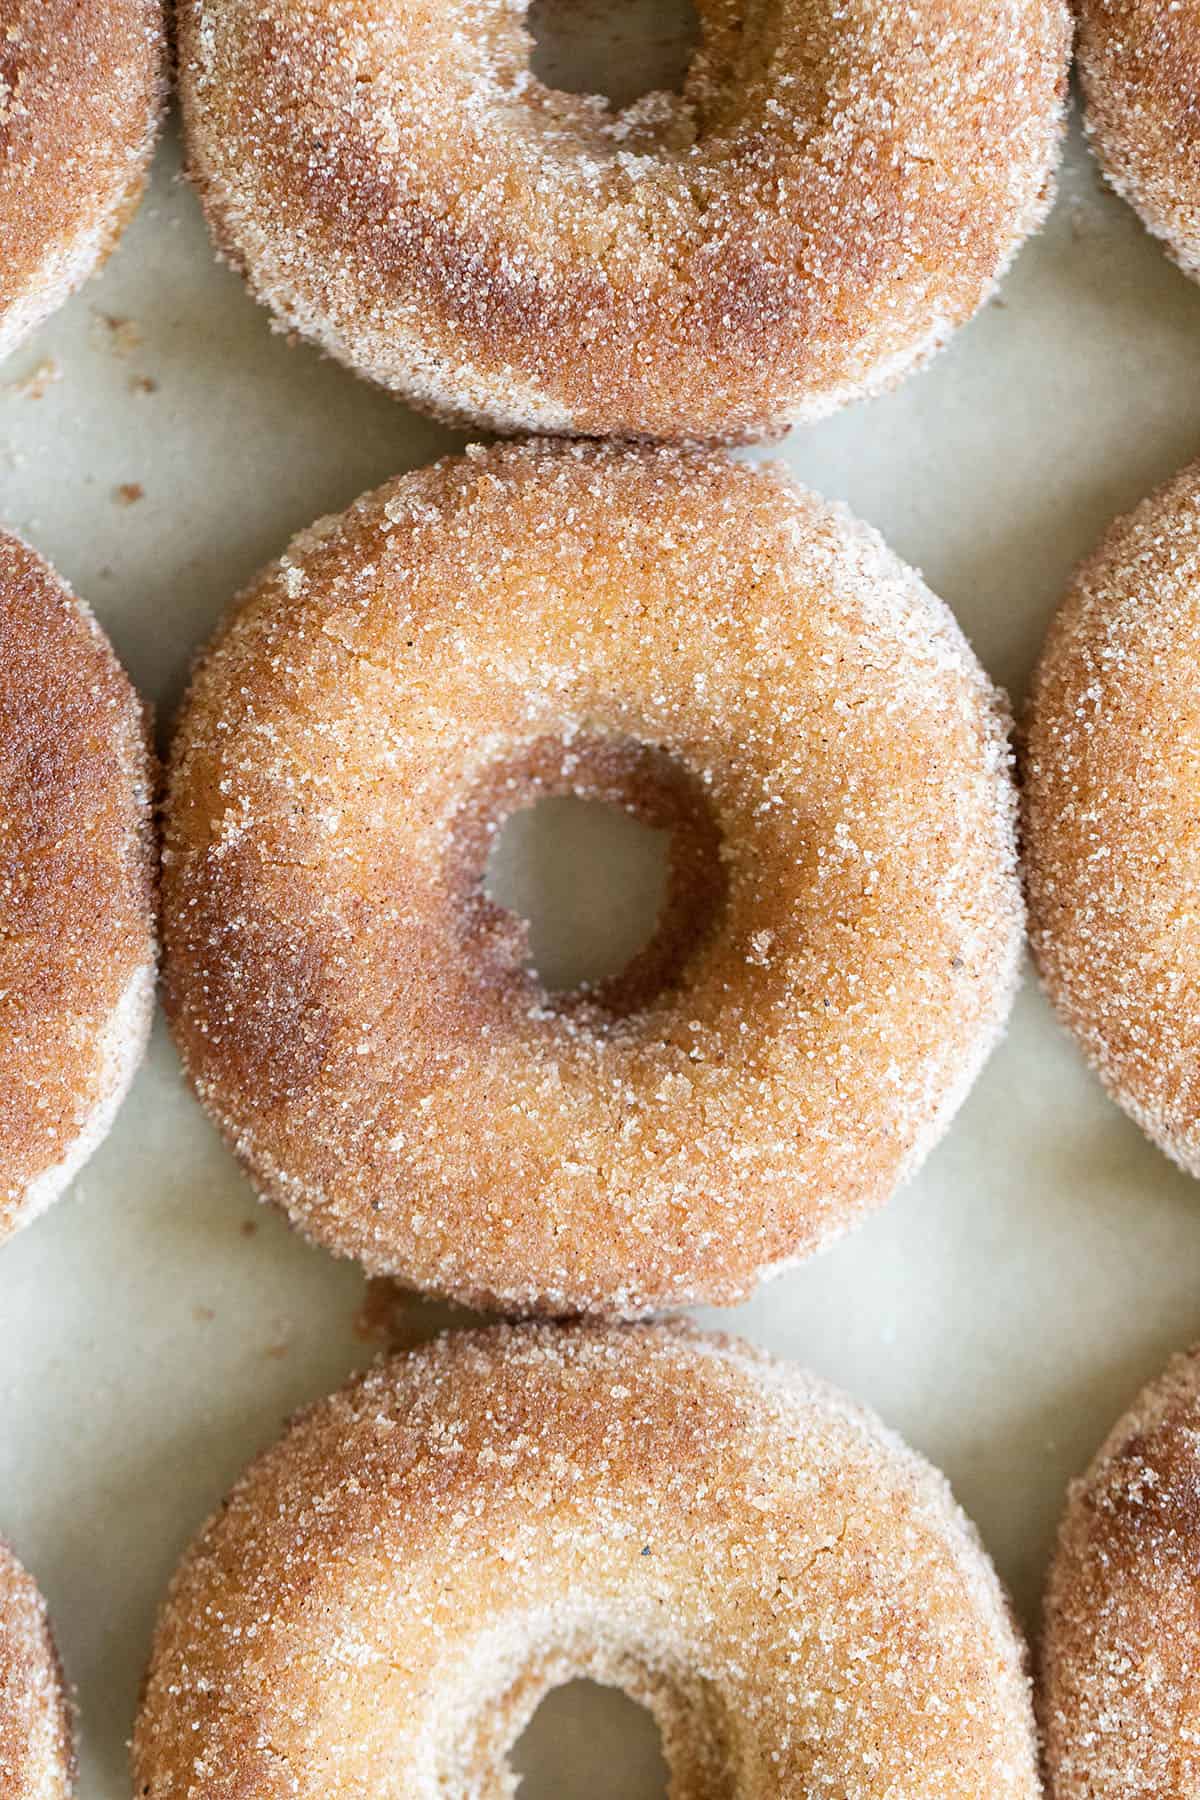 Cinnamon and sugar homemade donuts.